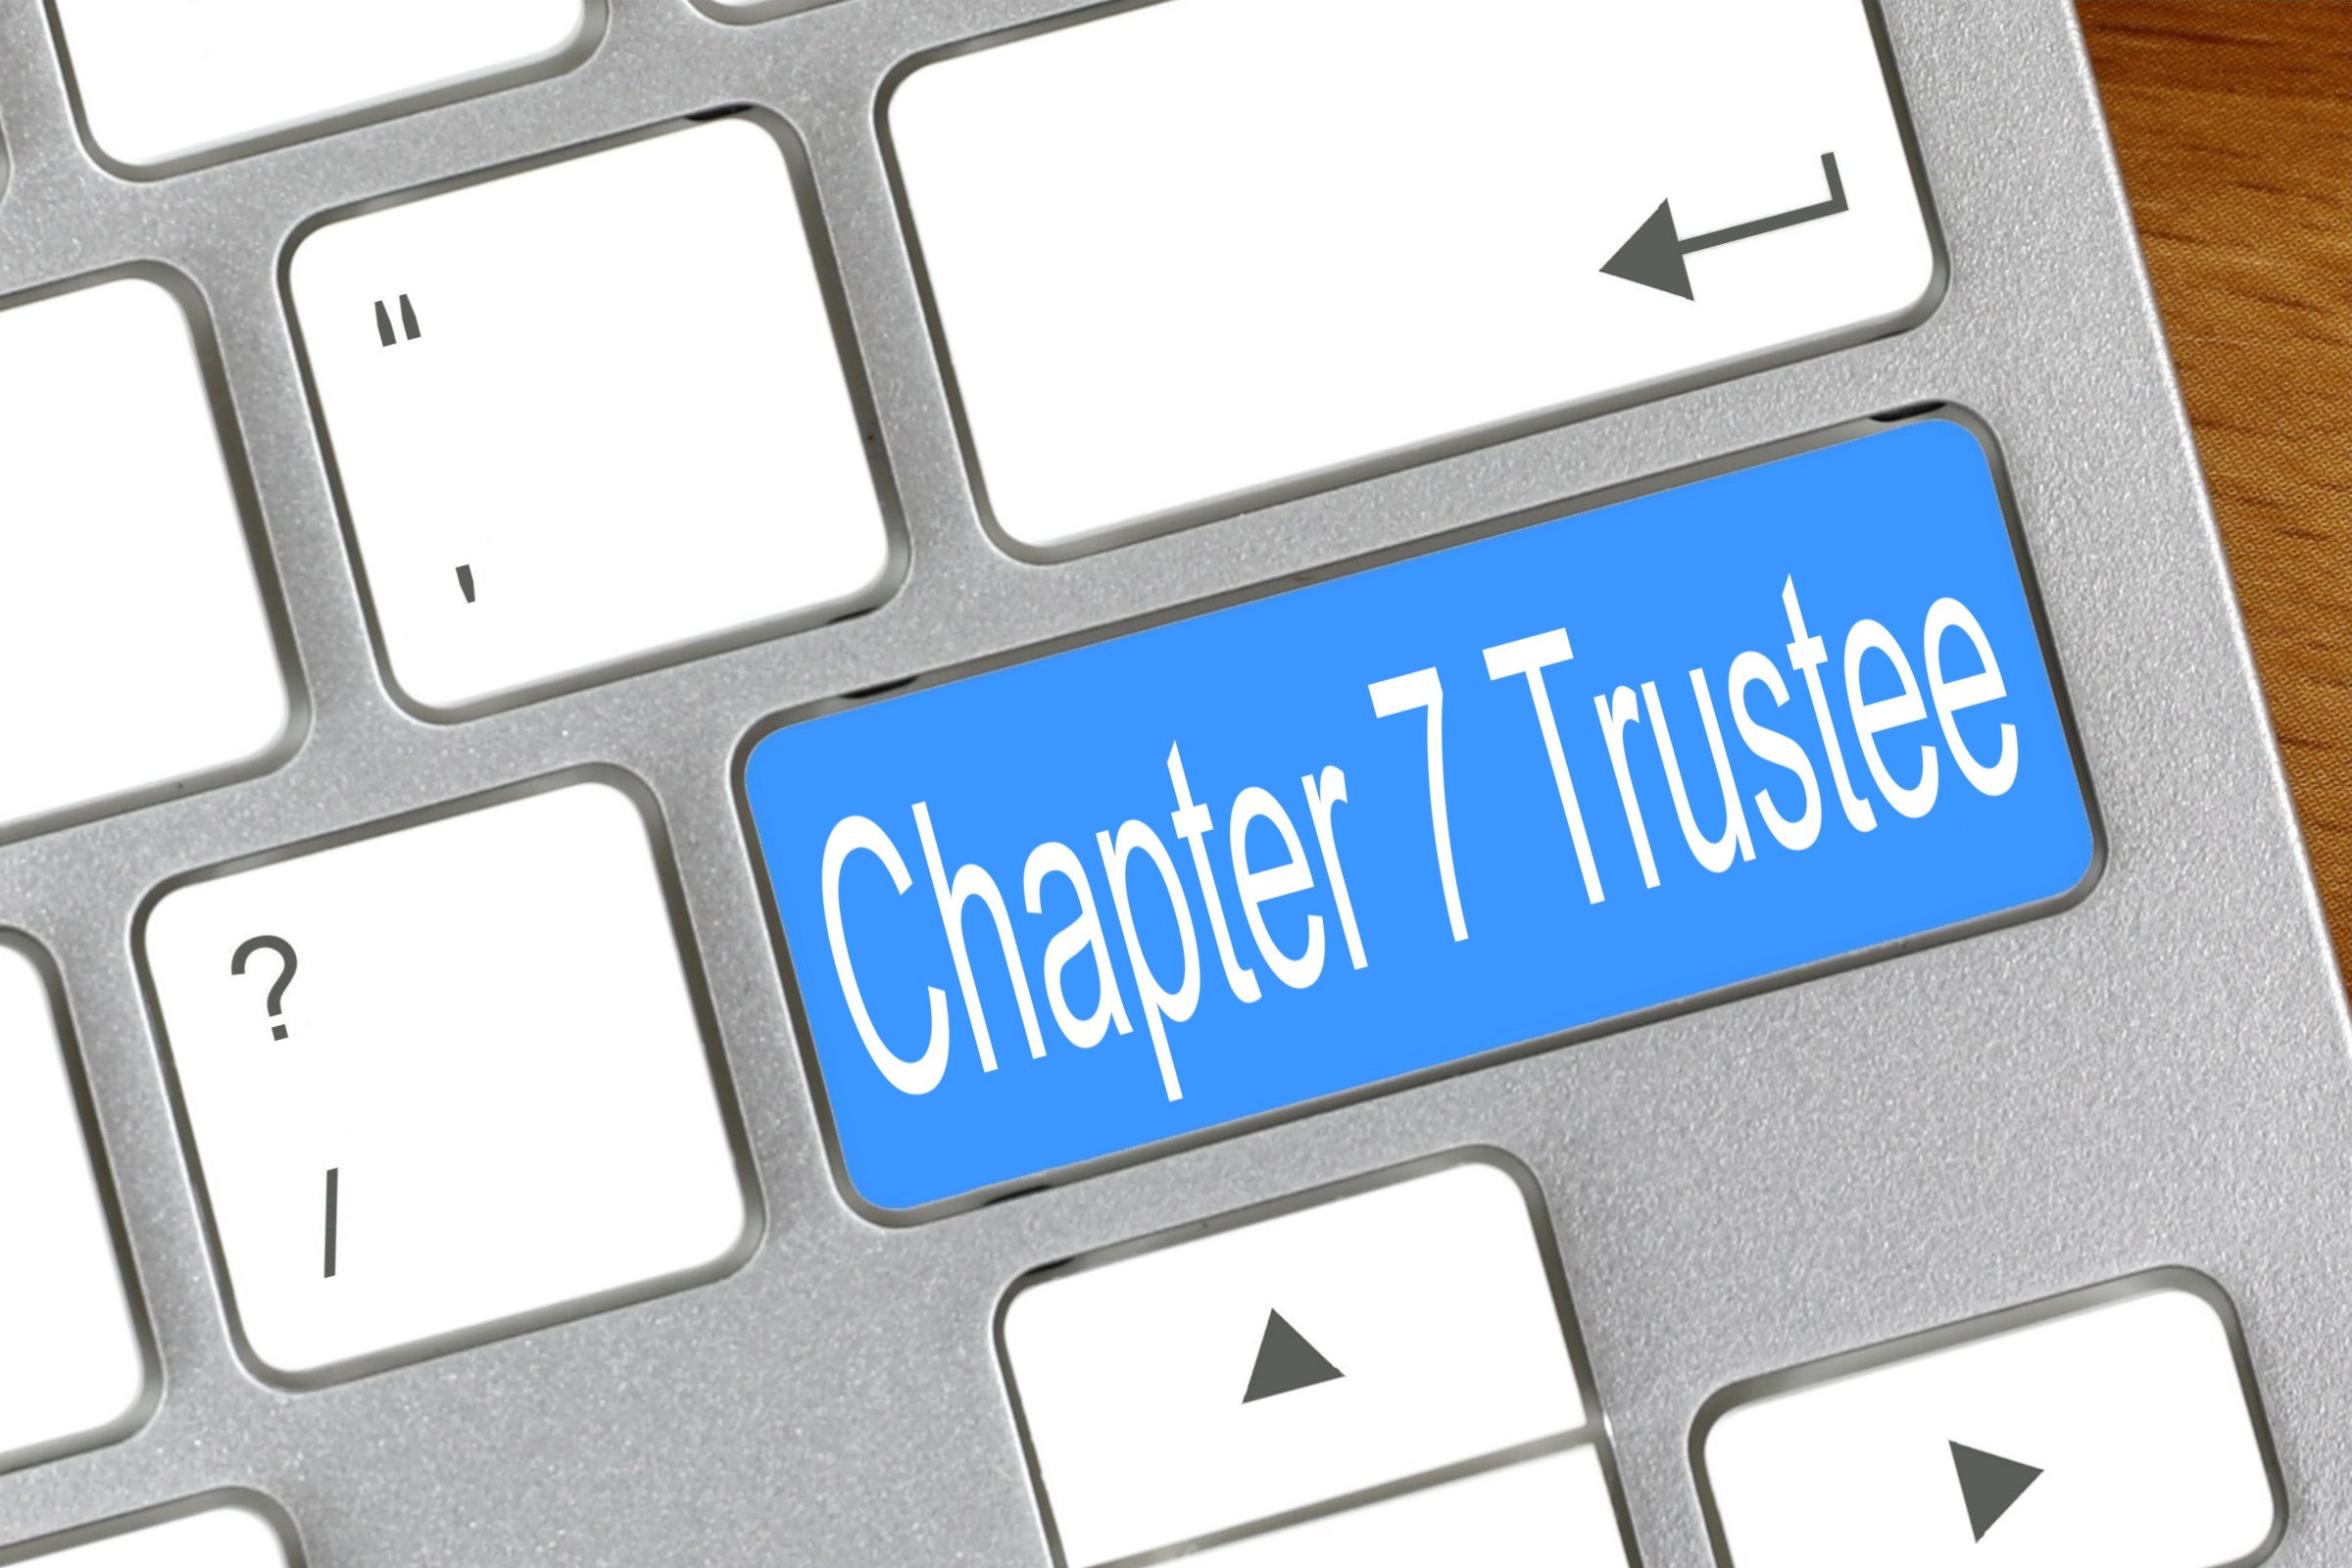 chapter 7 trustee